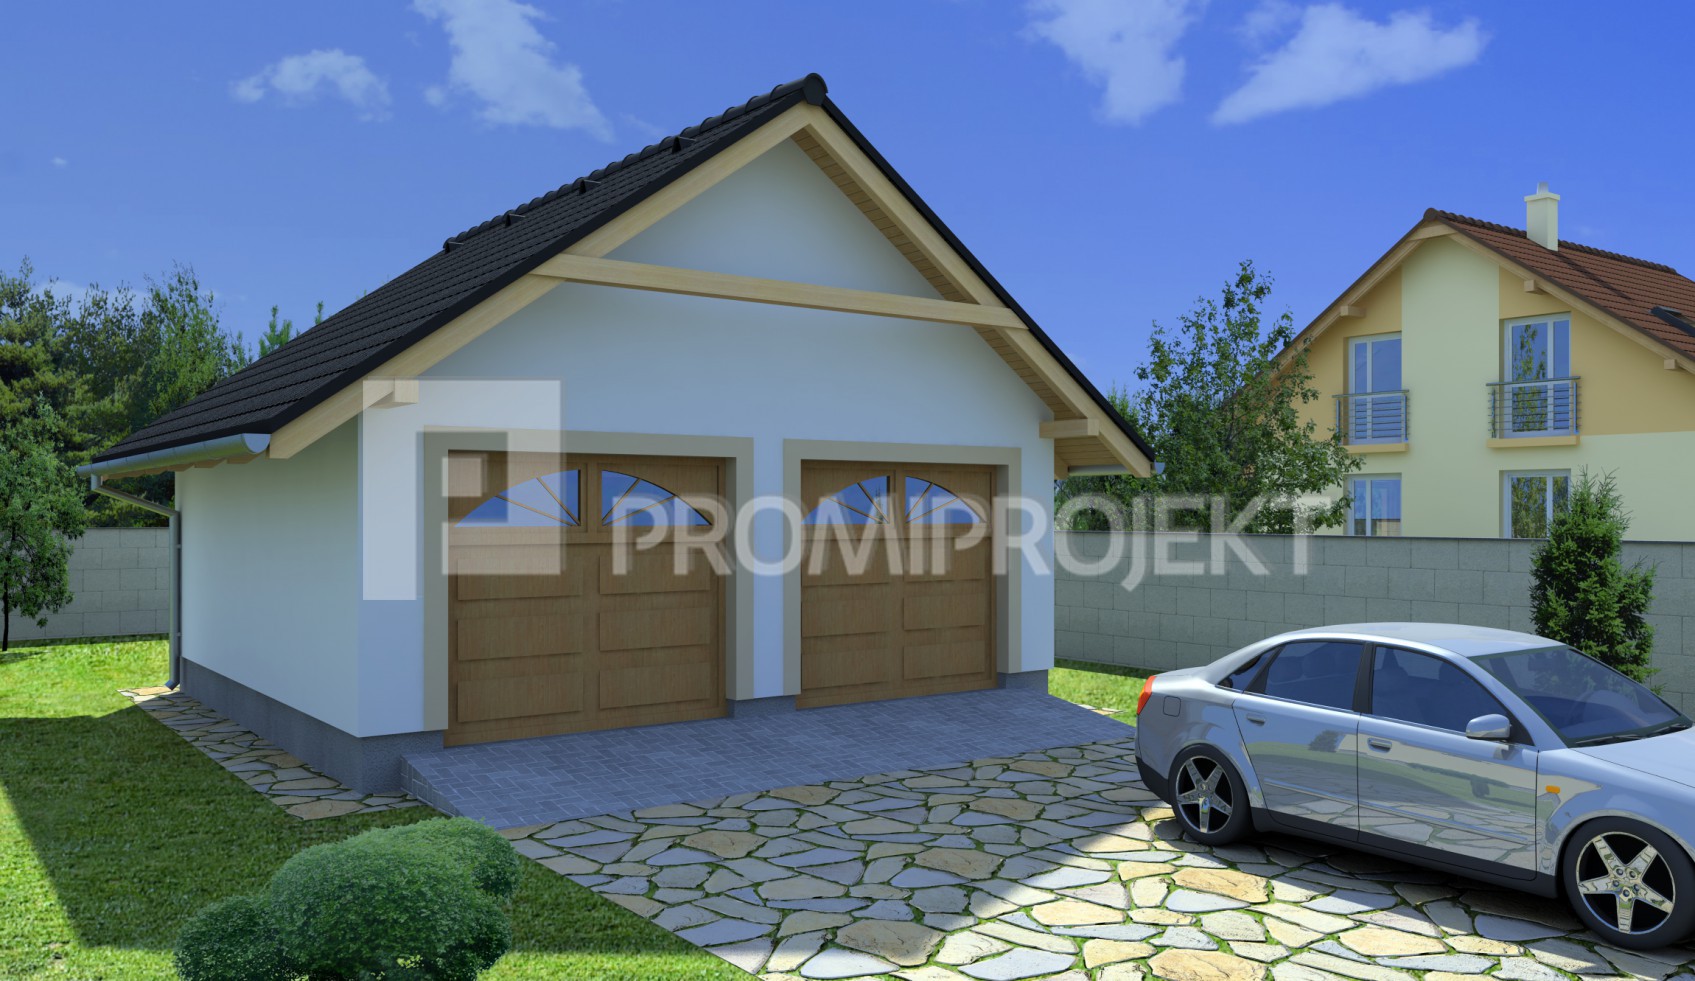 Promiprojekt - garaz-2g1, 1, Promipr